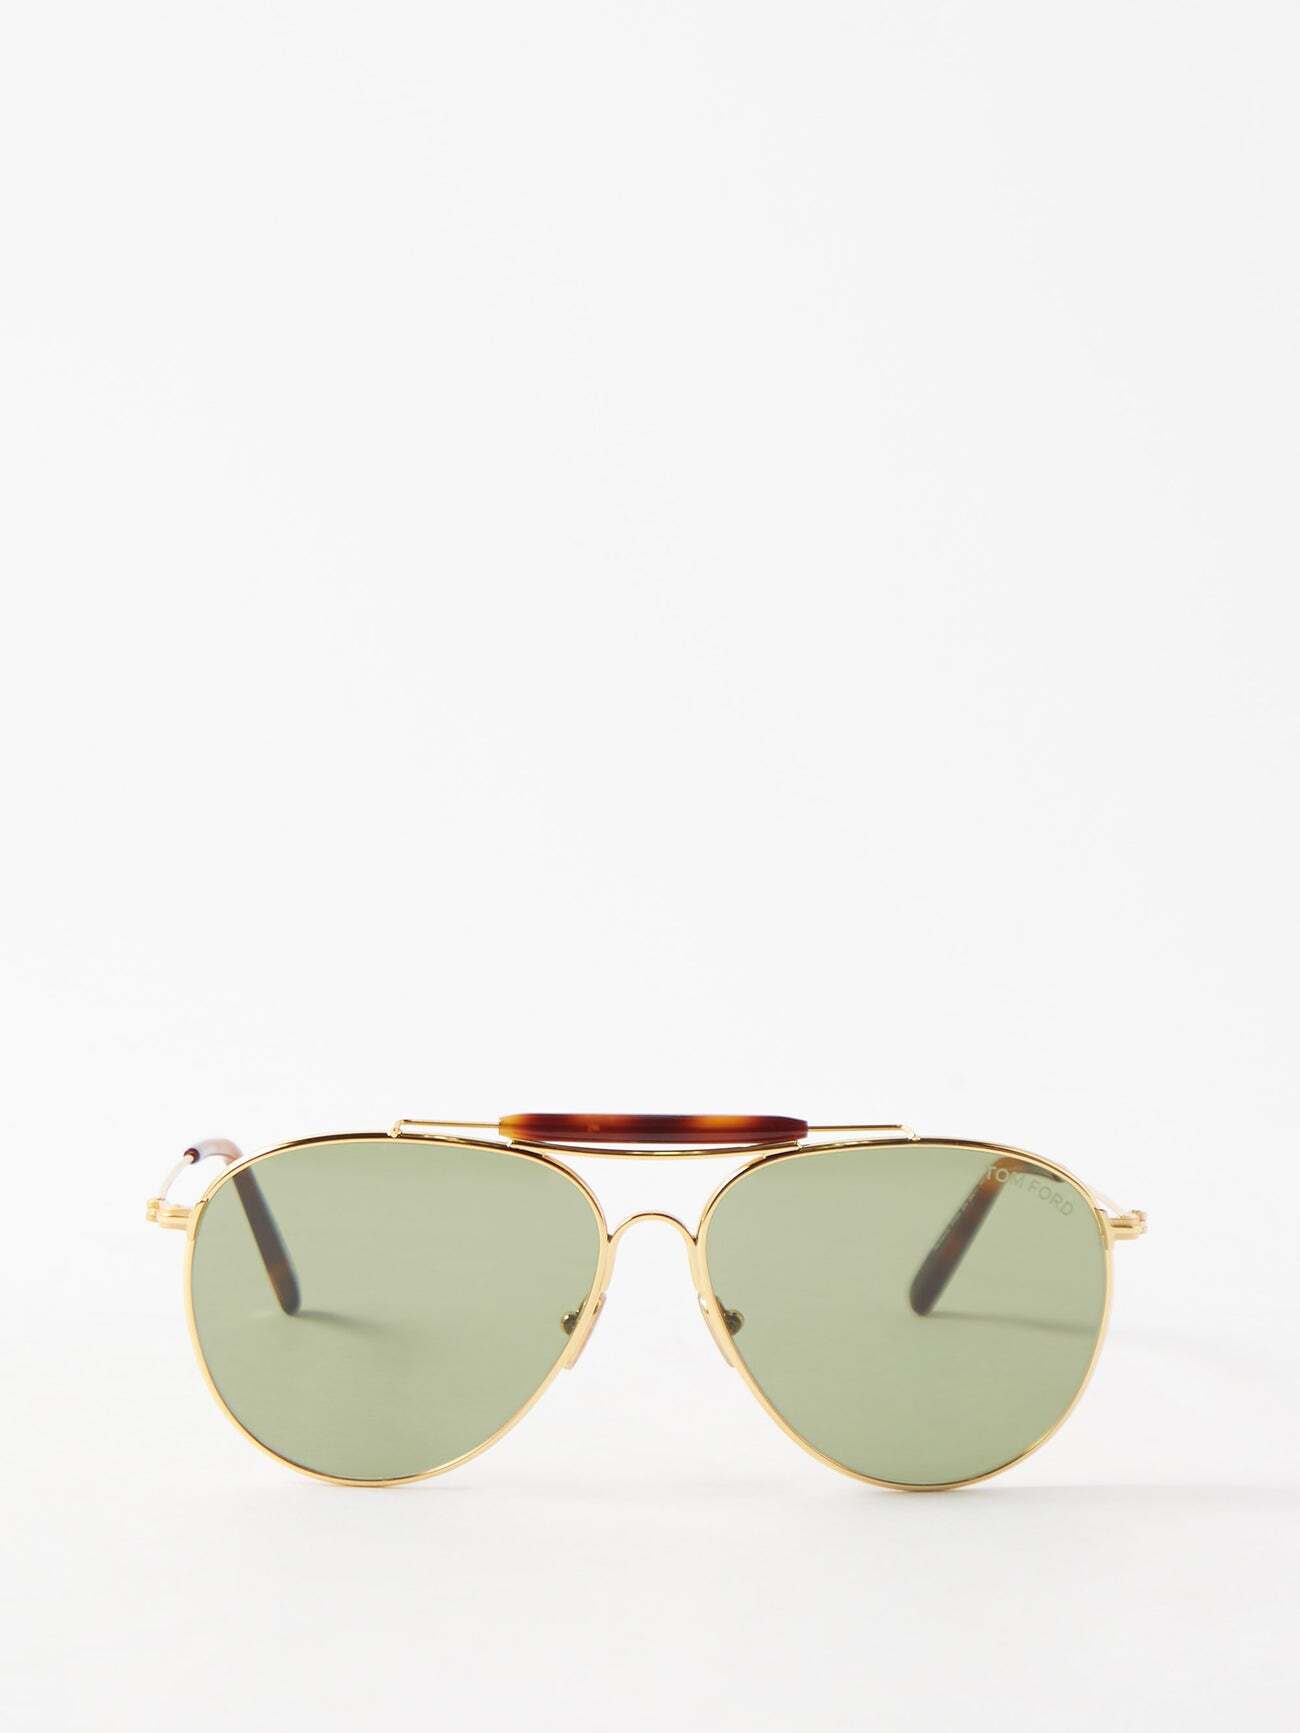 Tom Ford Eyewear - Raphael 02 Aviator Metal Sunglasses - Womens - Green Gold